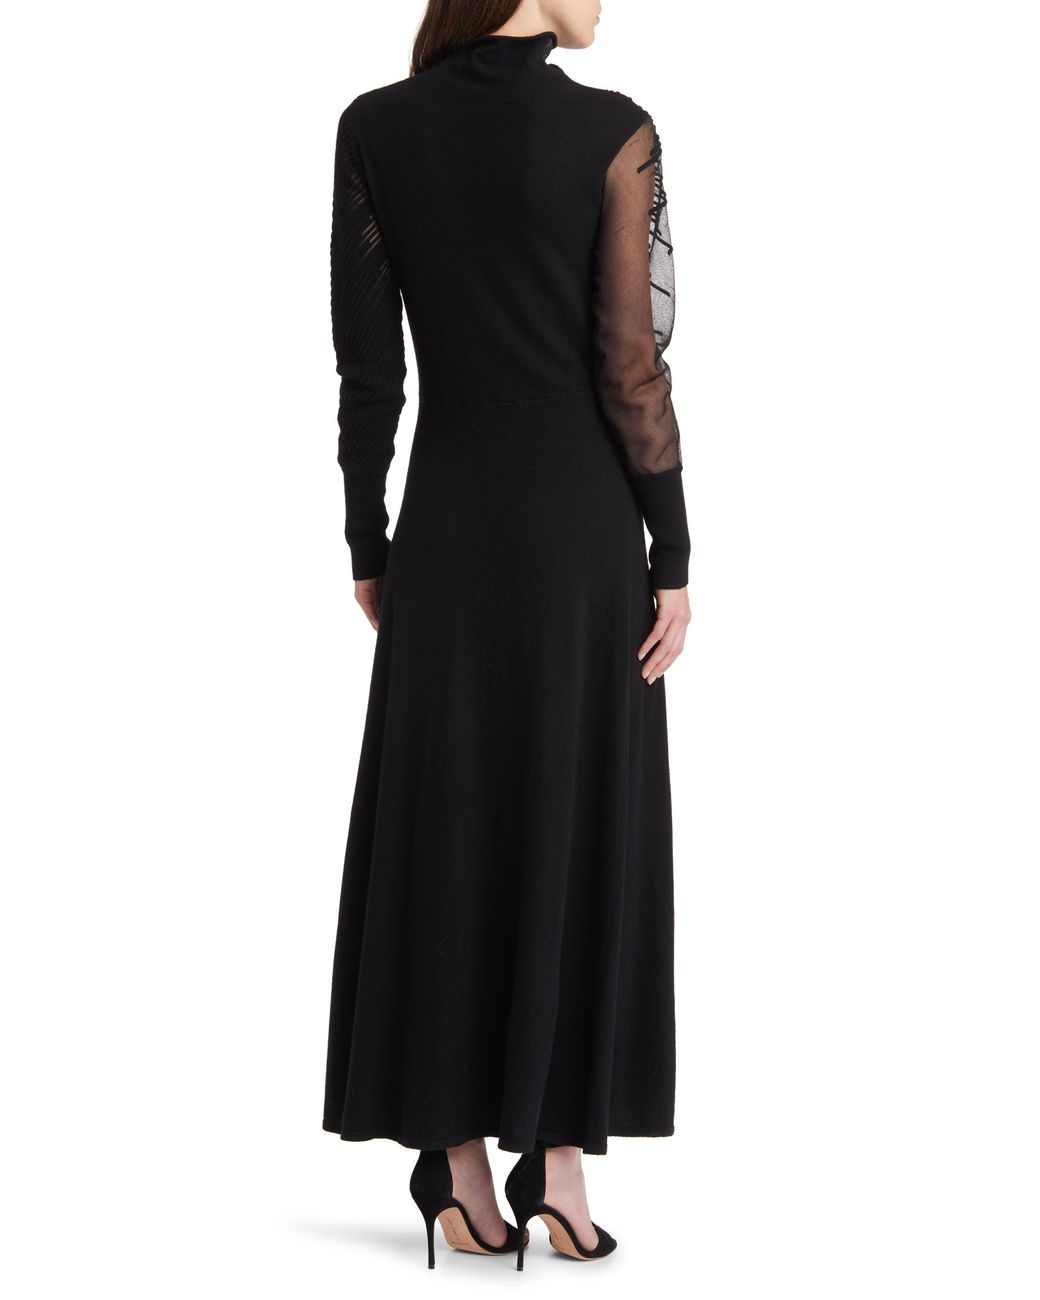 INC NEW Women's Black Printed Faux Leather Trim Sweater Dress XXL